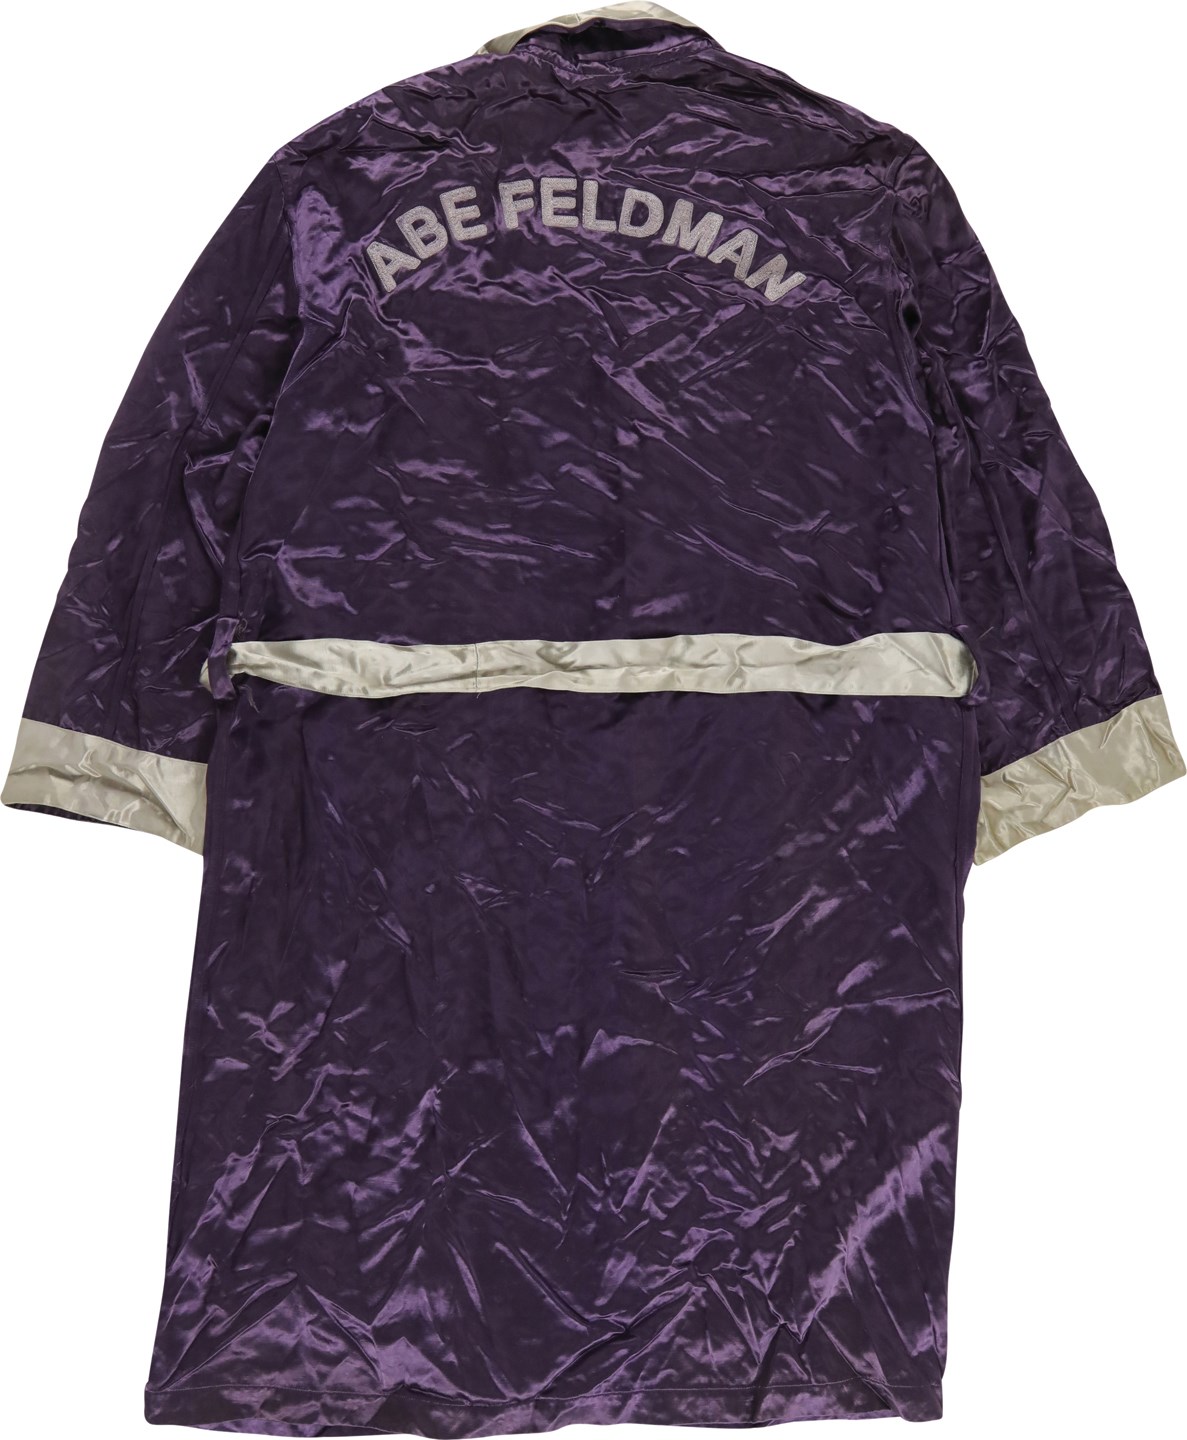 - Circa 1935 Abe Feldman Boxing Robe